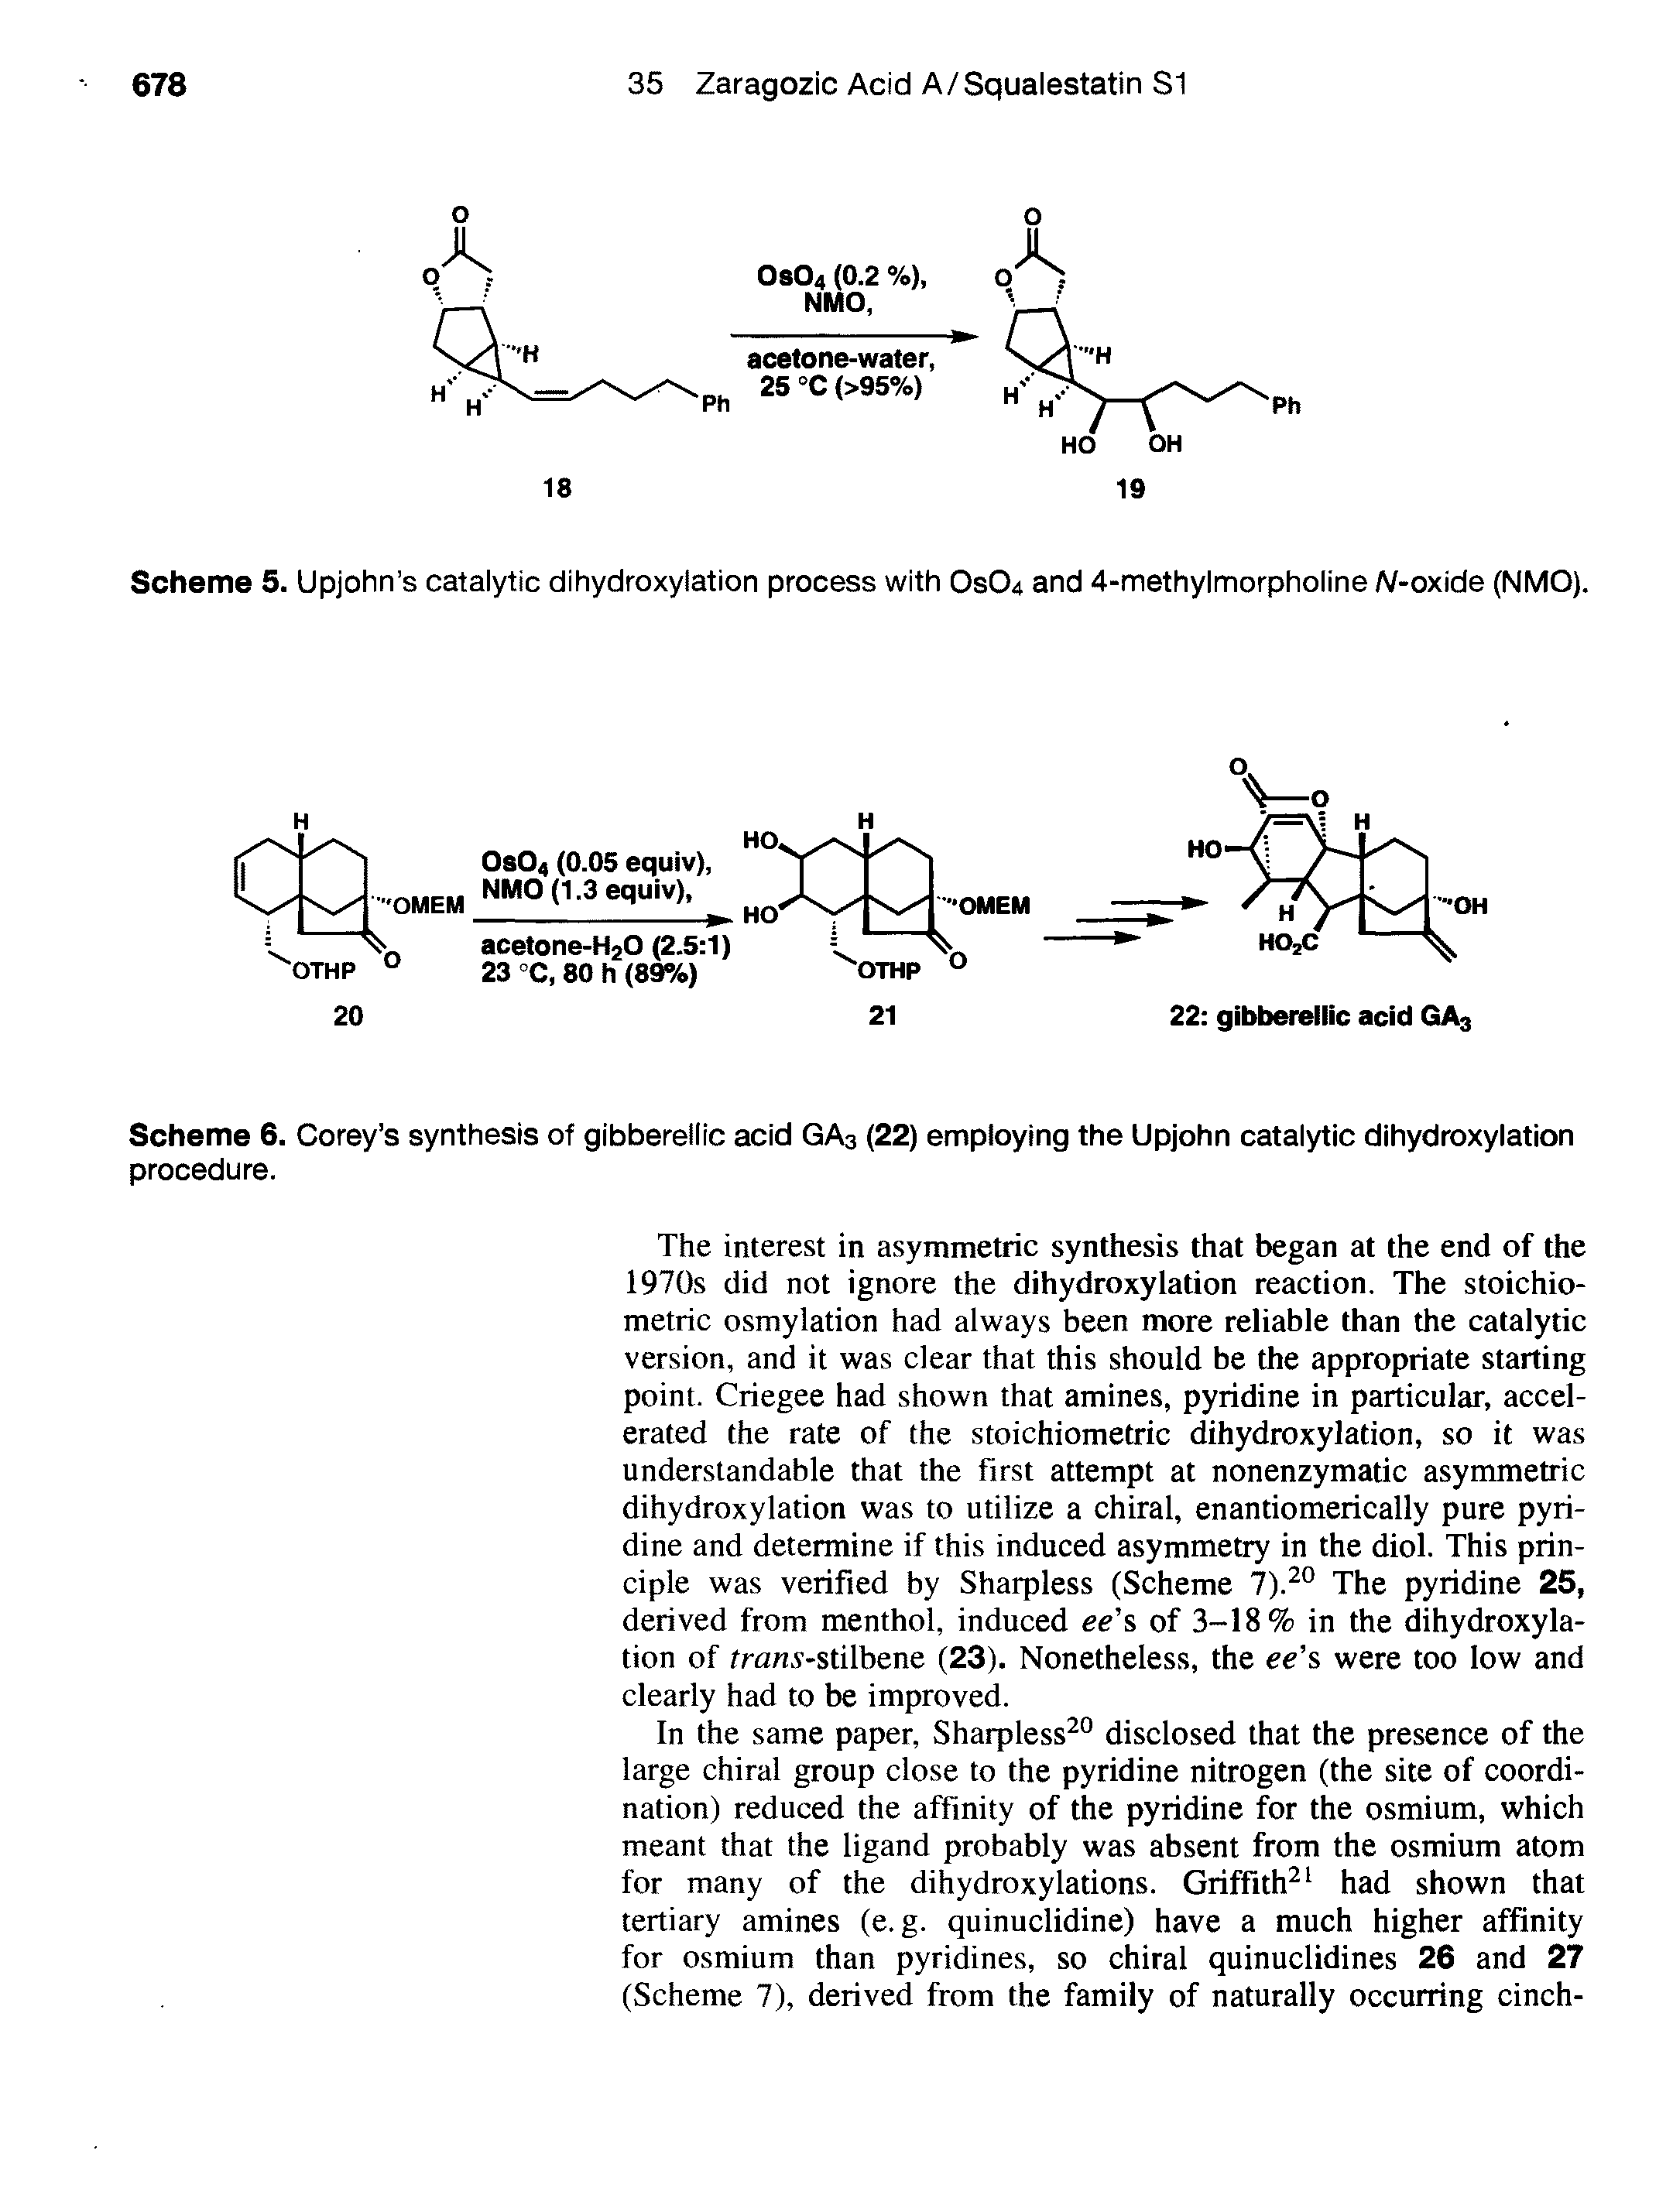 Scheme 5. Upjohn s catalytic dihydroxylation process with 0s04 and 4-methylmorpholine /V-oxide (NMO).